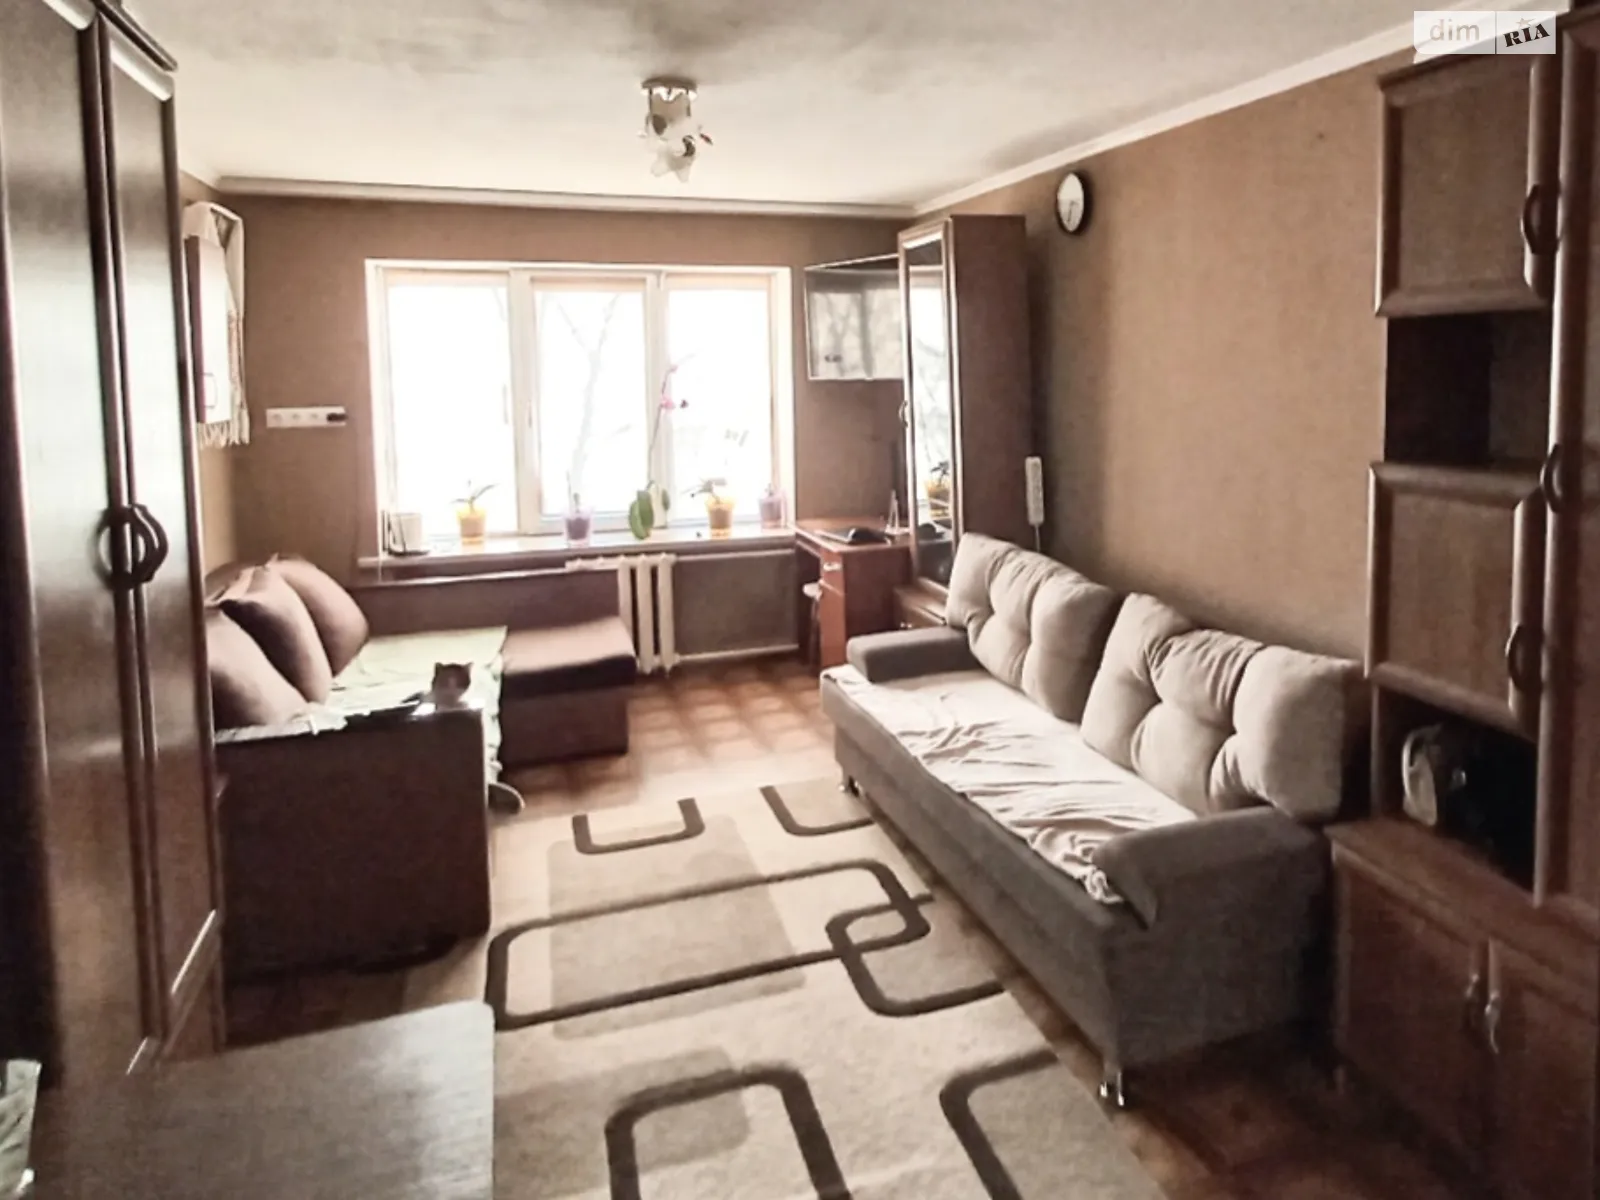 Продается комната 17 кв. м в Ровно, цена: 11500 $